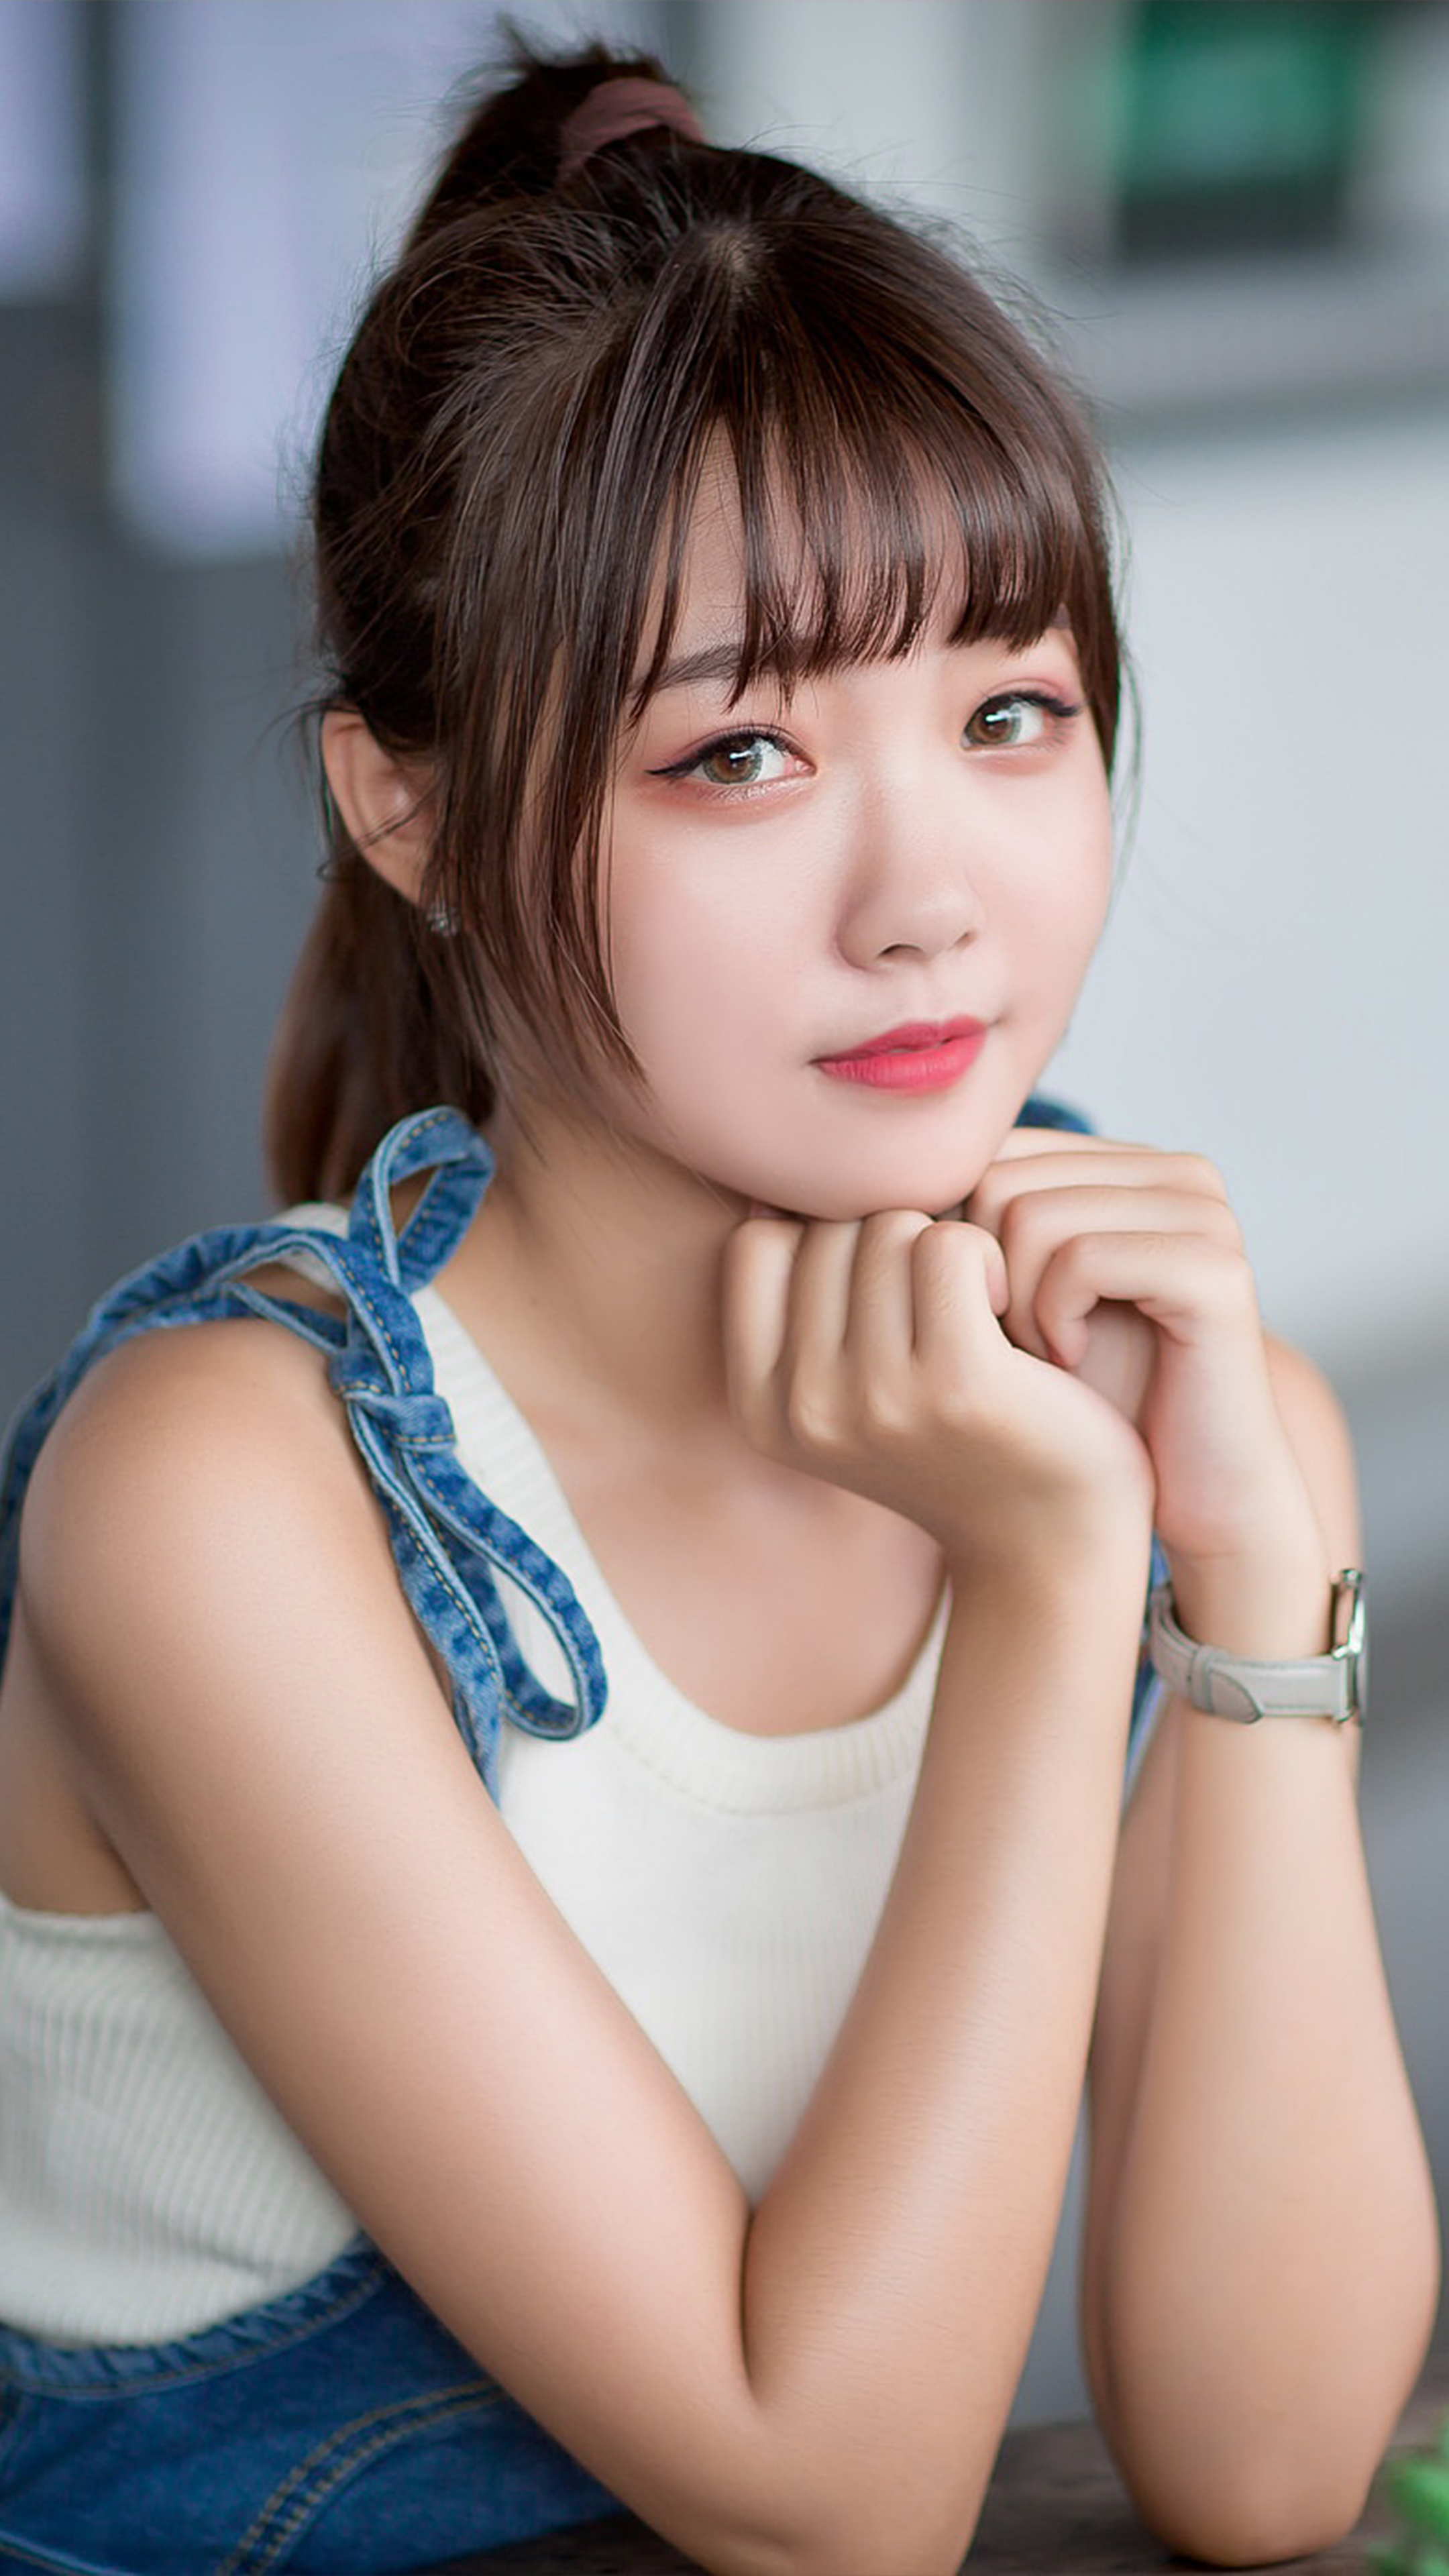 https://www.mordeo.org/files/uploads/2018/10/Cute-Adorable-Asian-Girl-Photography-4K-Ultra-HD-Mobile-Wallpaper.jpg